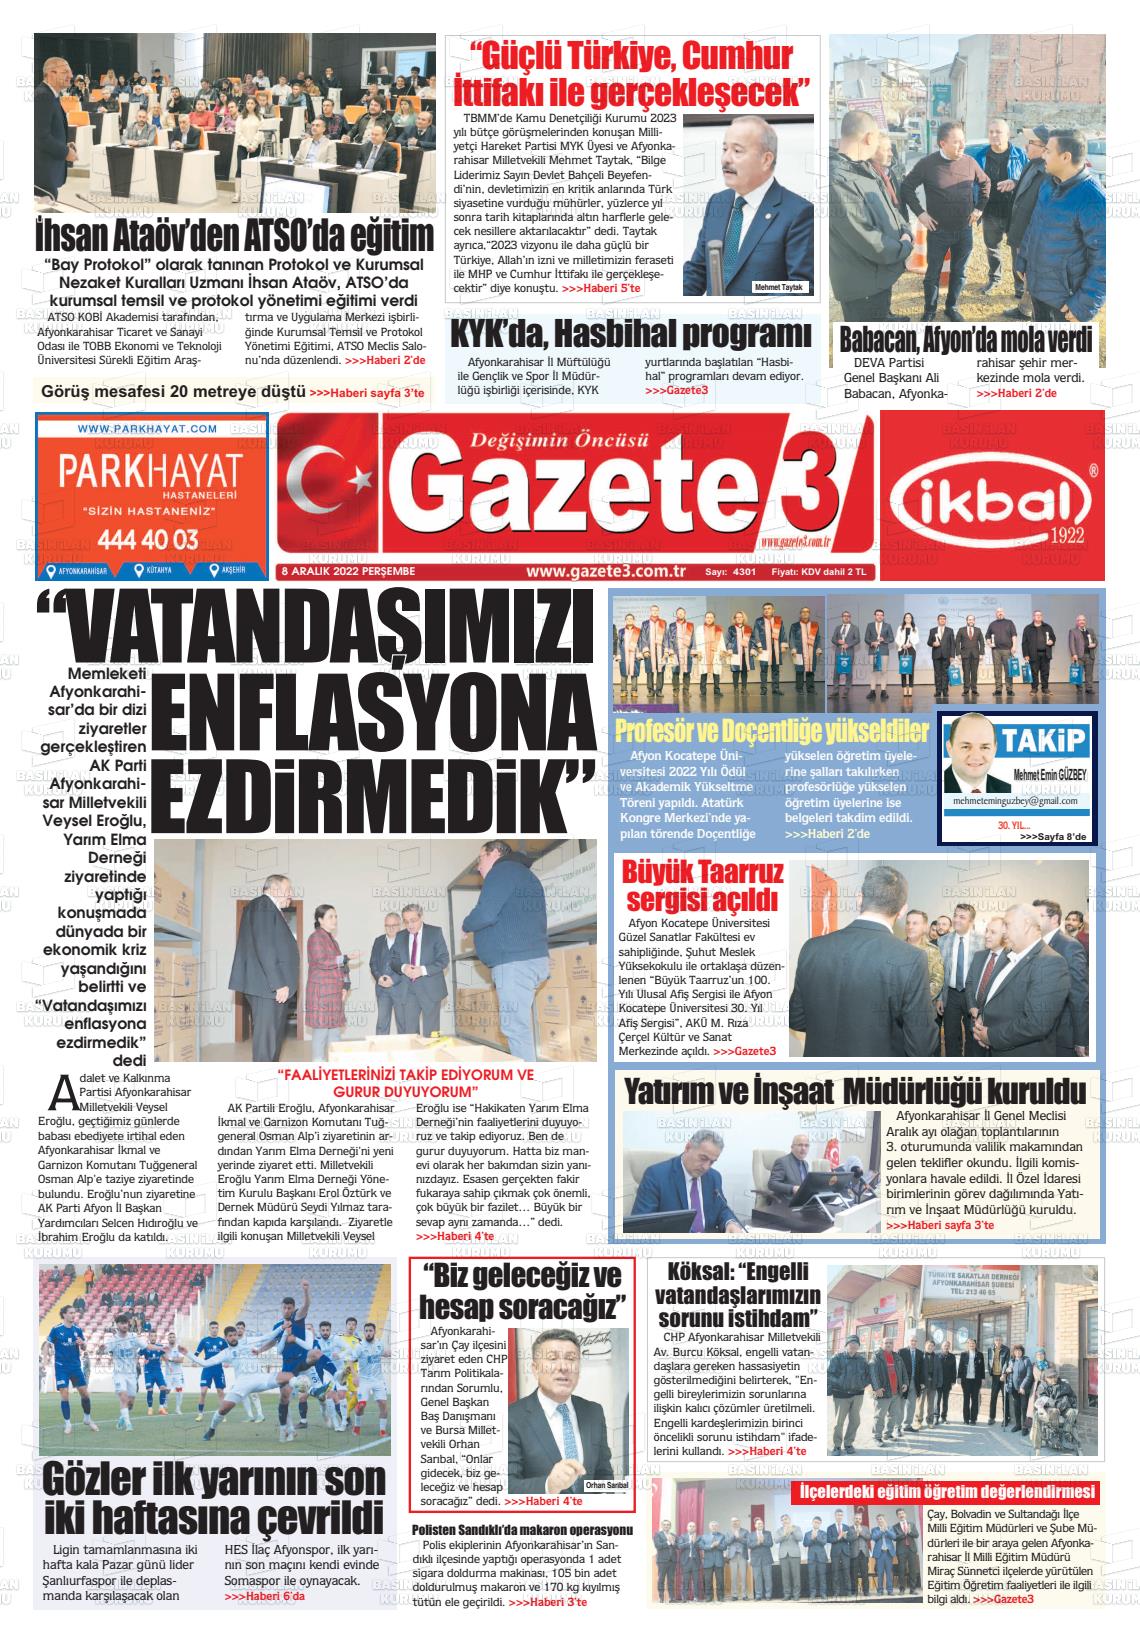 08 Aralık 2022 Gazete 3 Gazete Manşeti